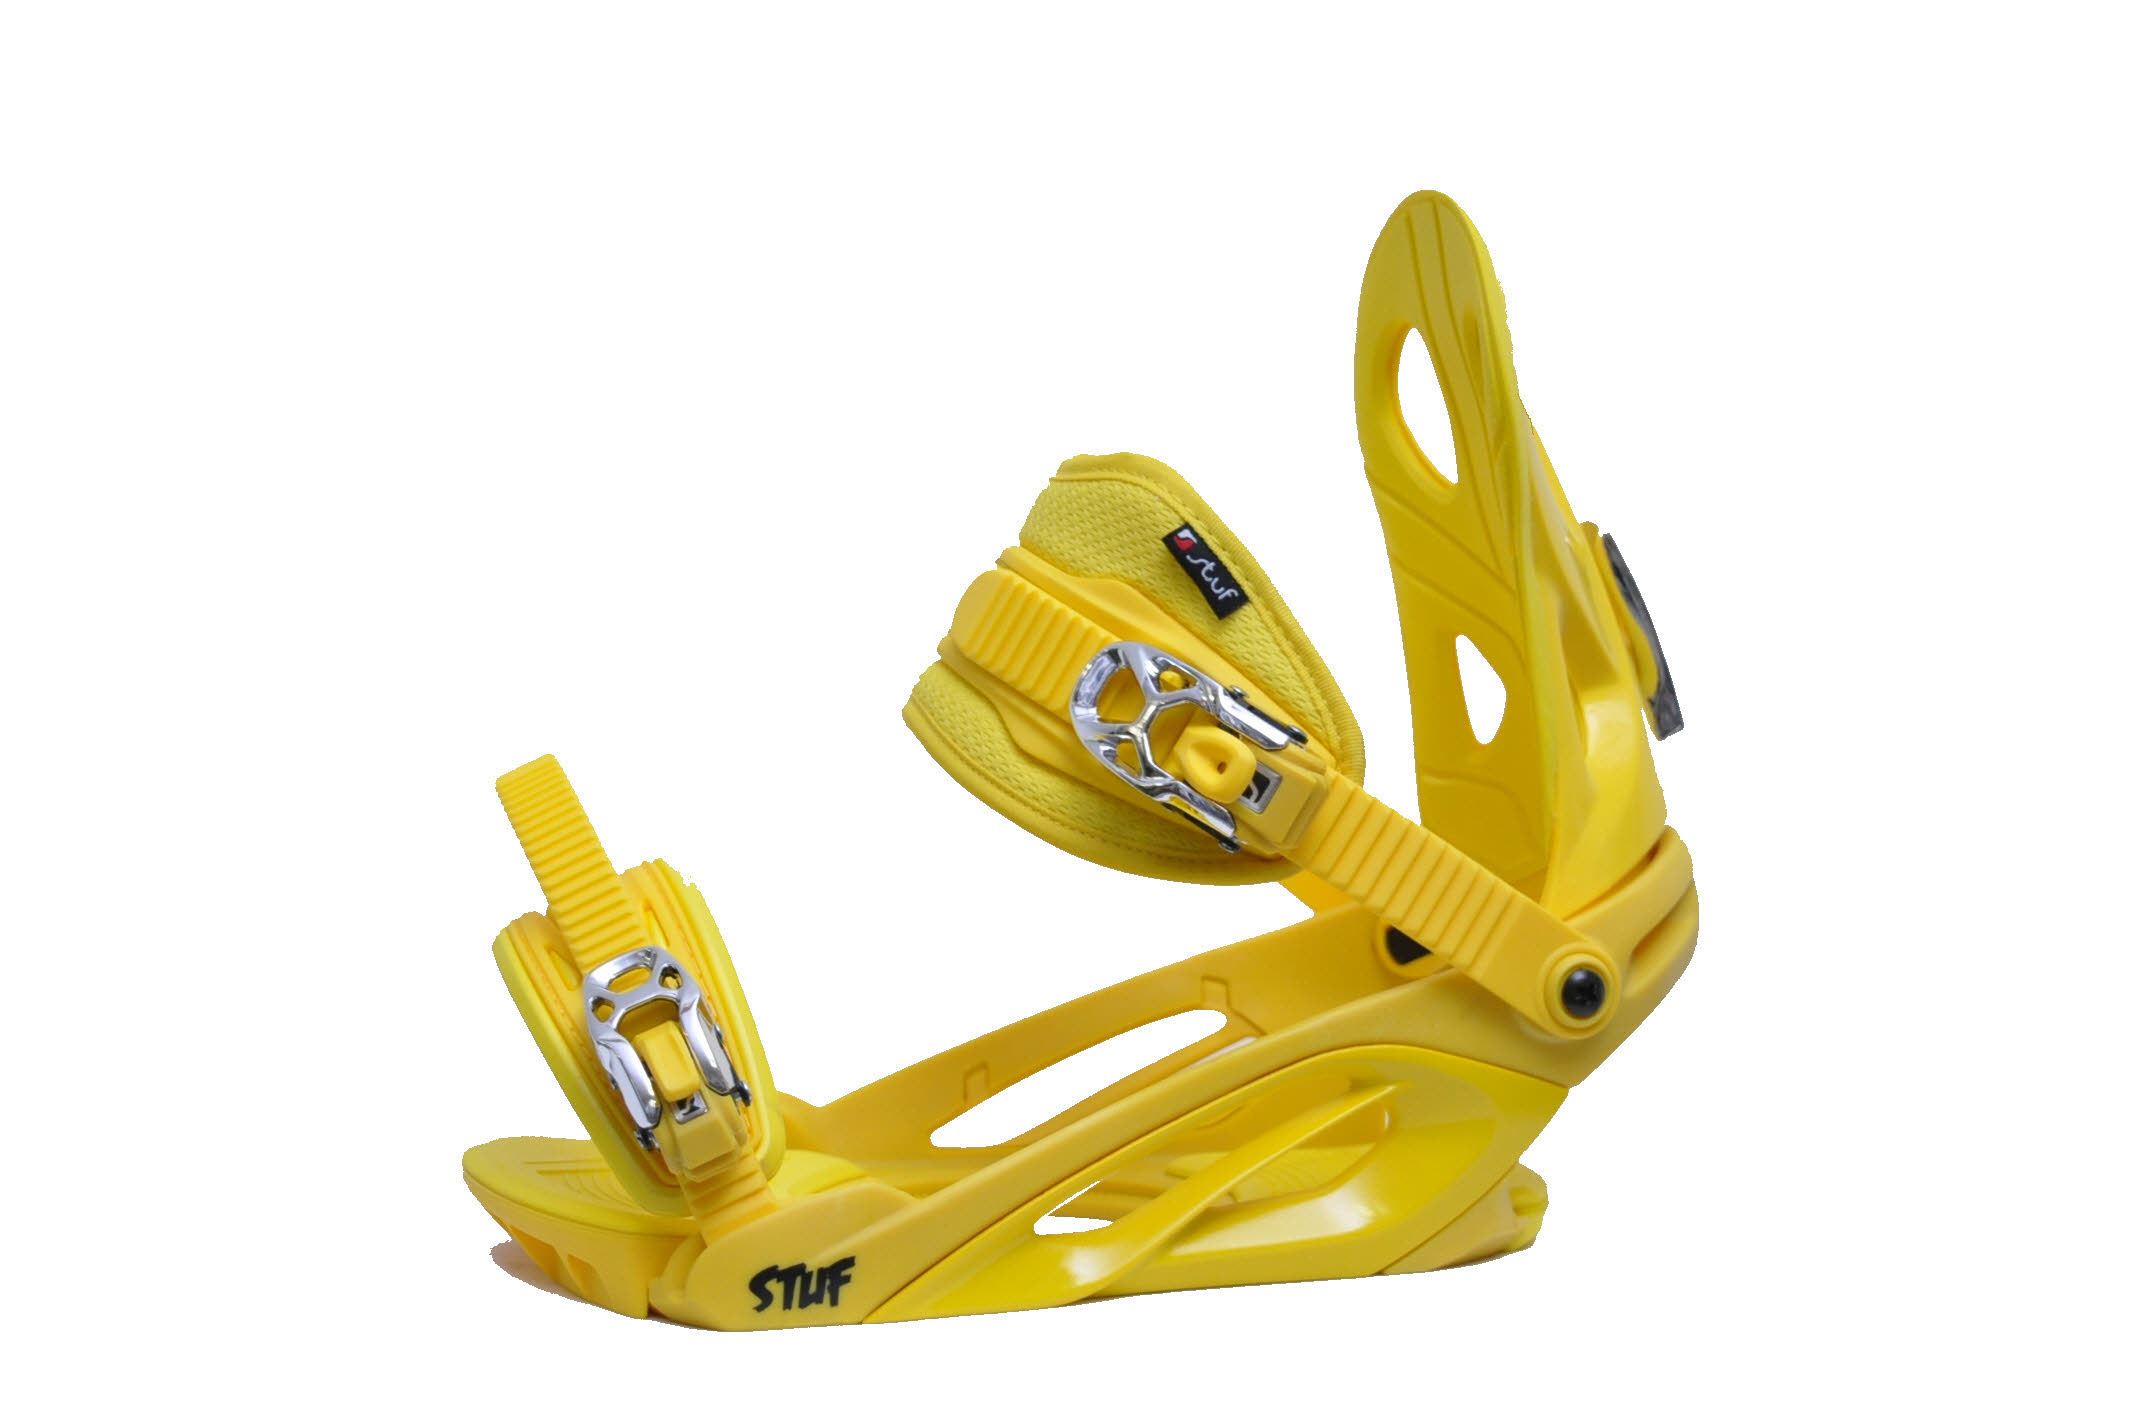 Stuf STYLE SB-Bindung Snowboard Binding Softbindung Erwachsene yellow NEU